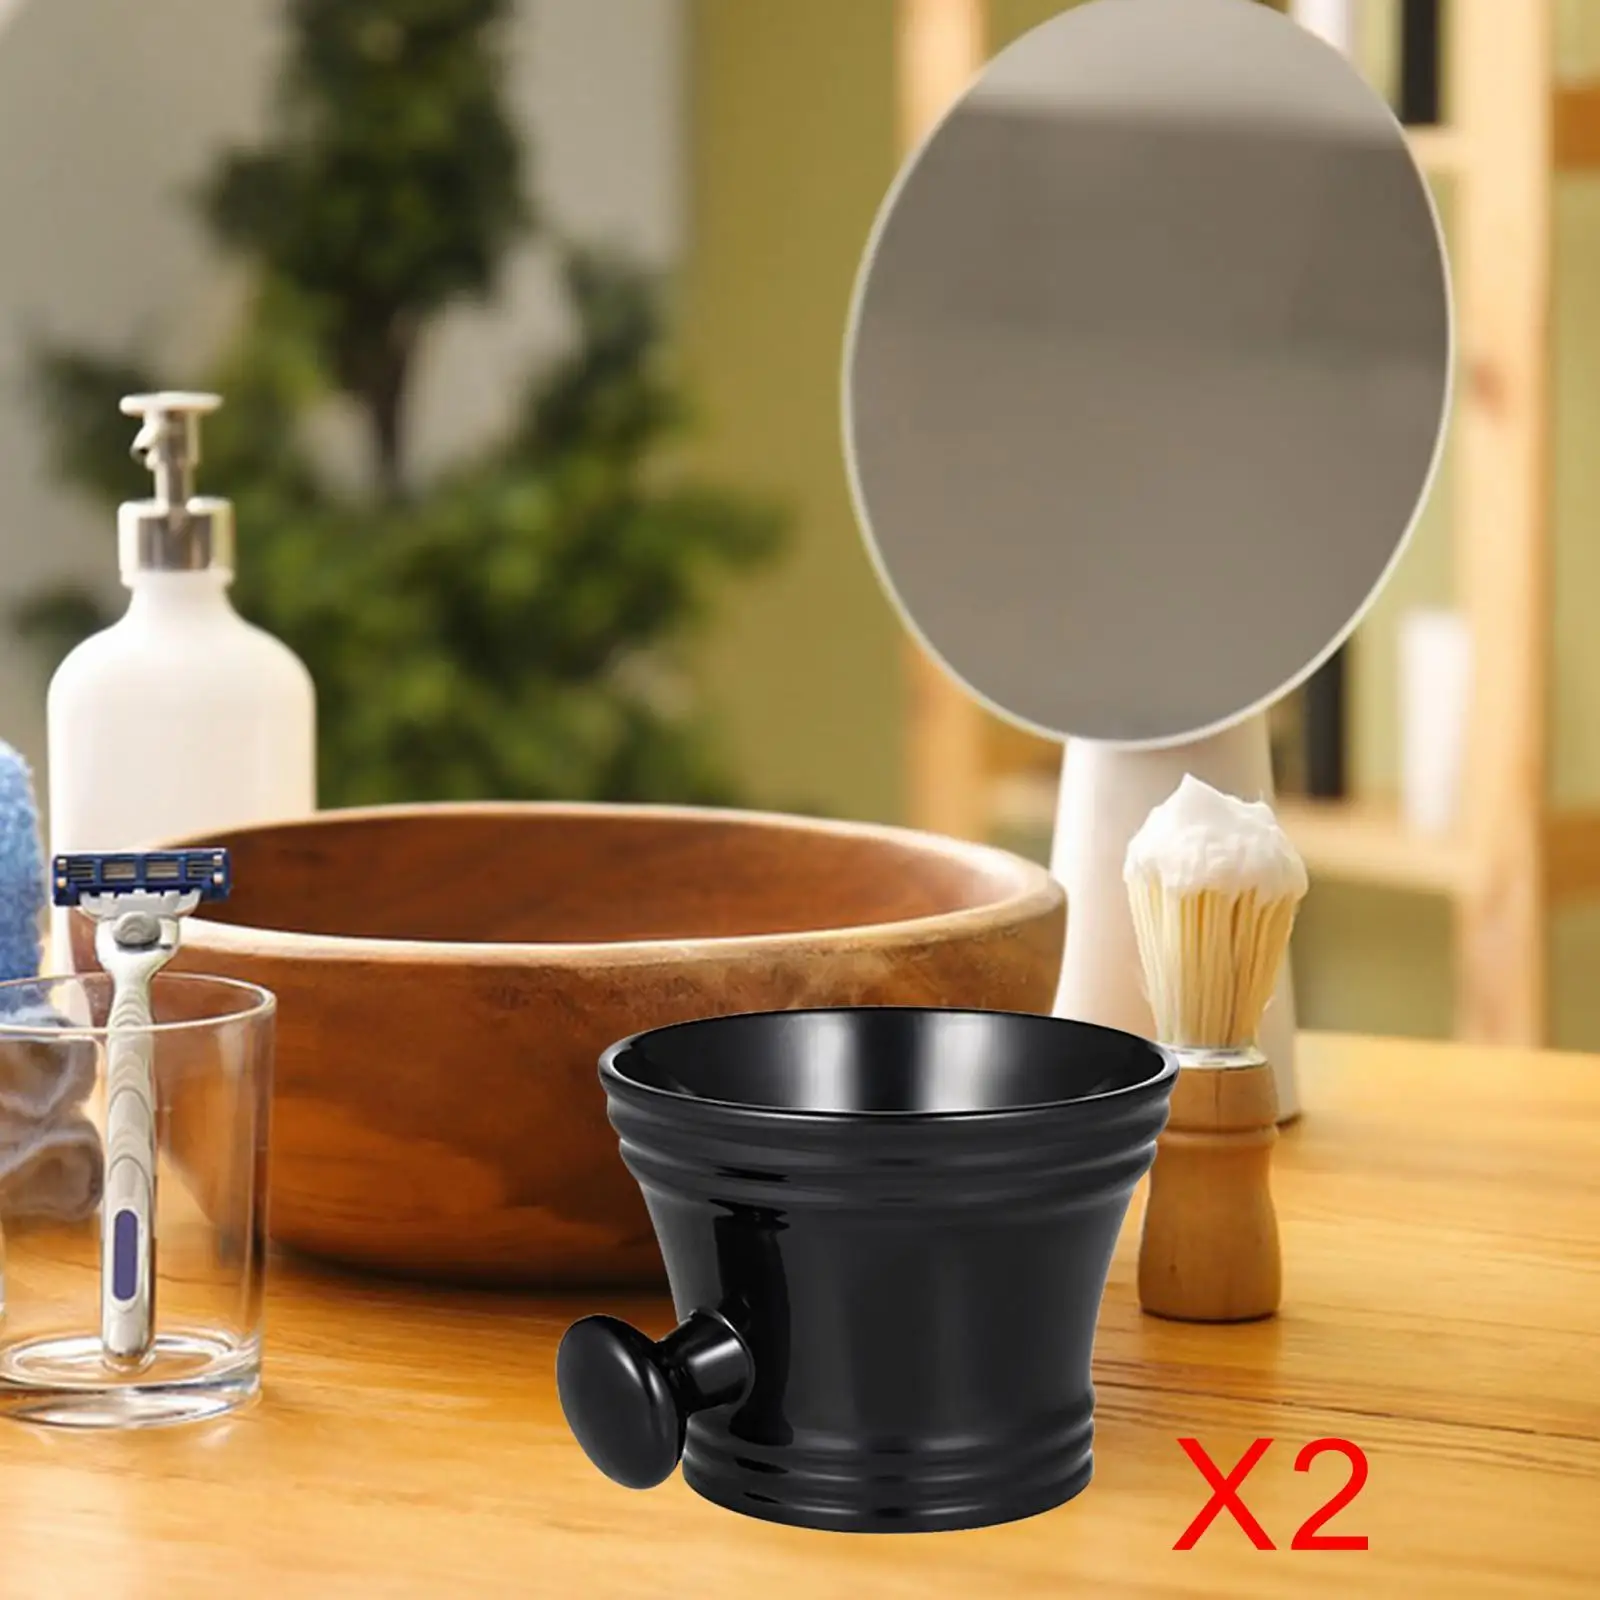 2 Pieces Shaving Soap Bowl/ Shaving Cream Bowl/ Shave Soap Cup/ Shaving Bowl for Husband